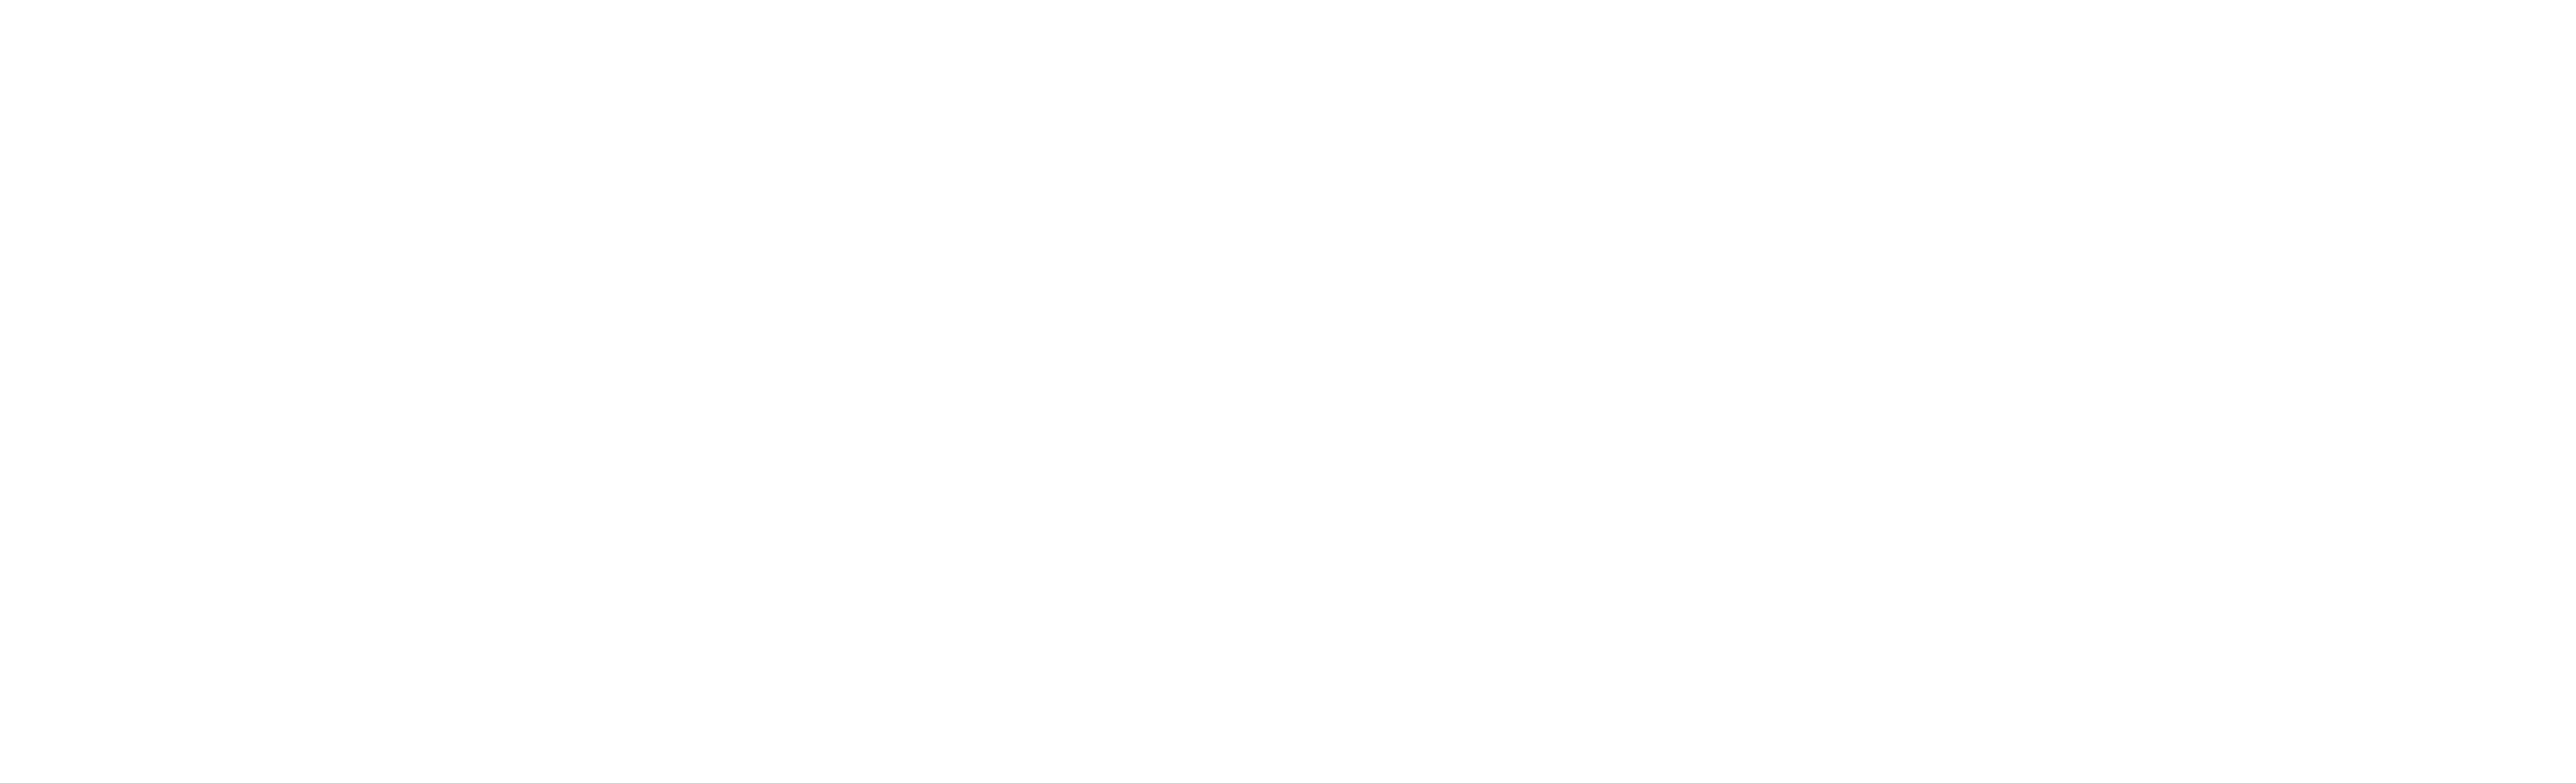 Michigan Intl Speedway - Michigan Speedway Logo Png Clipart (2638x802), Png Download